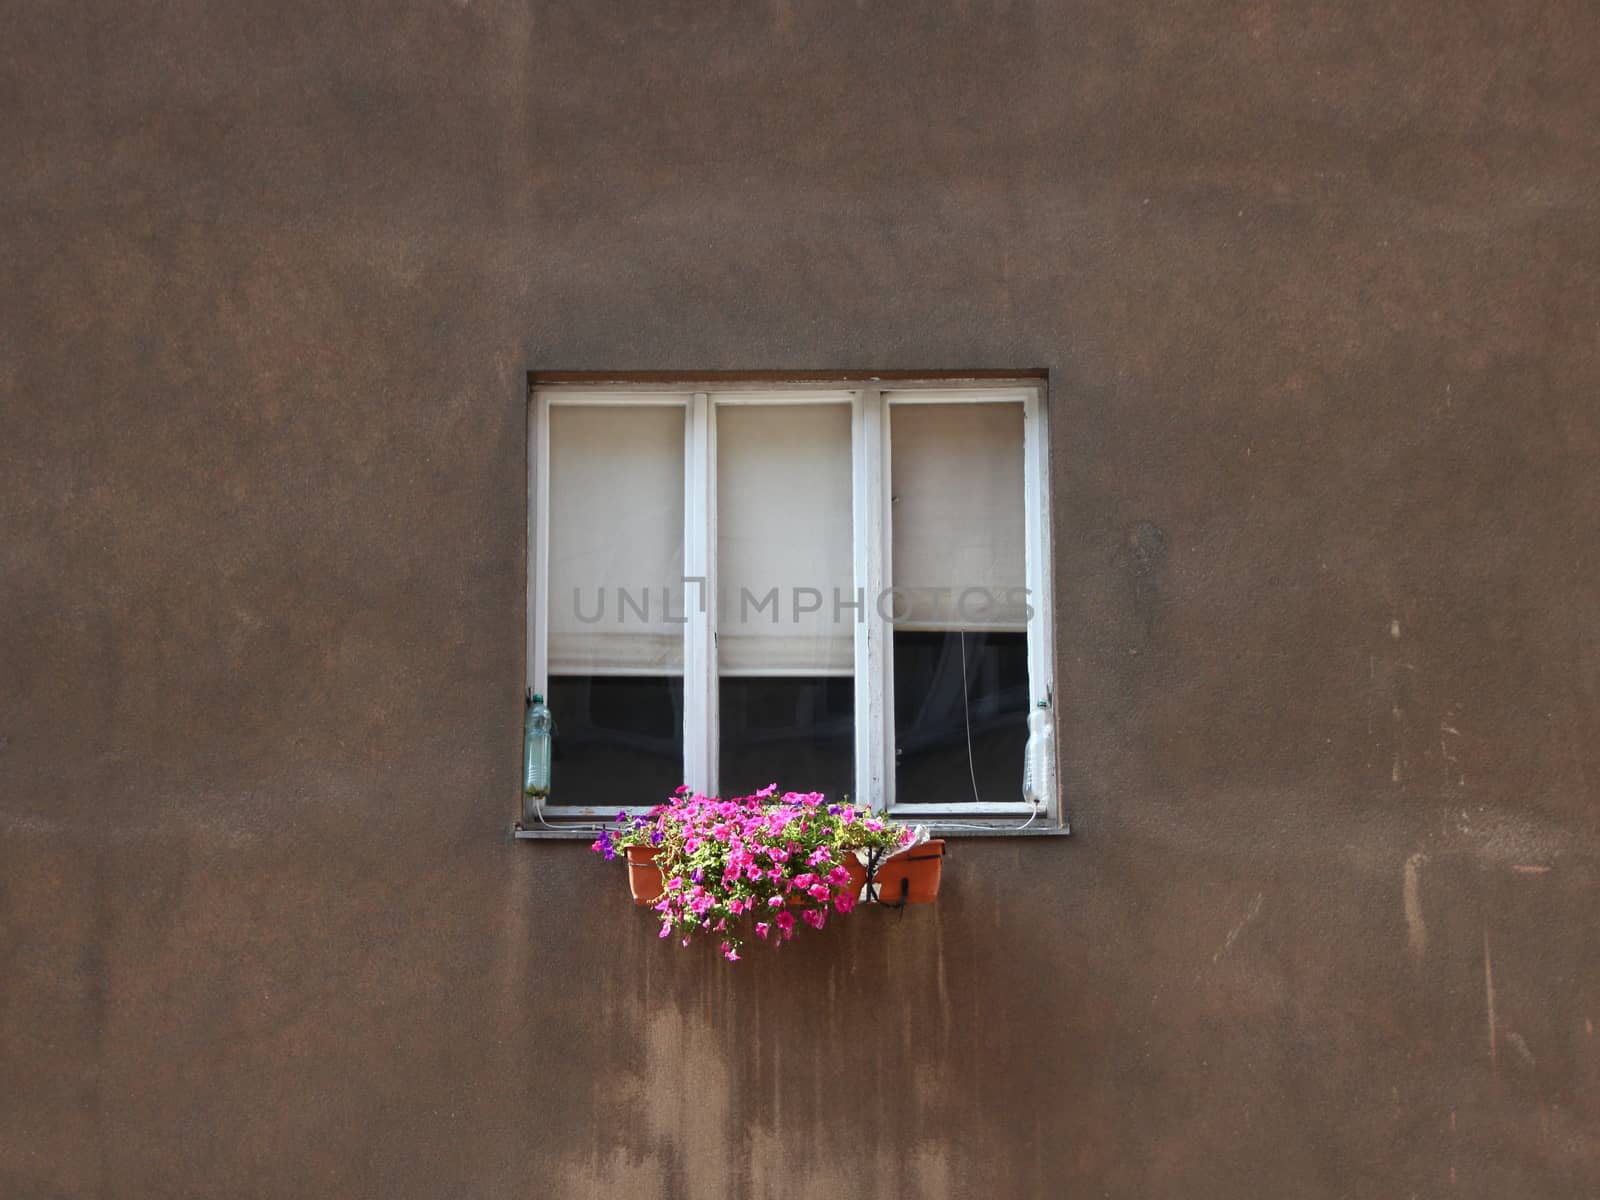 Urban Flower Box under Tree Cell Window on Concrete Wall